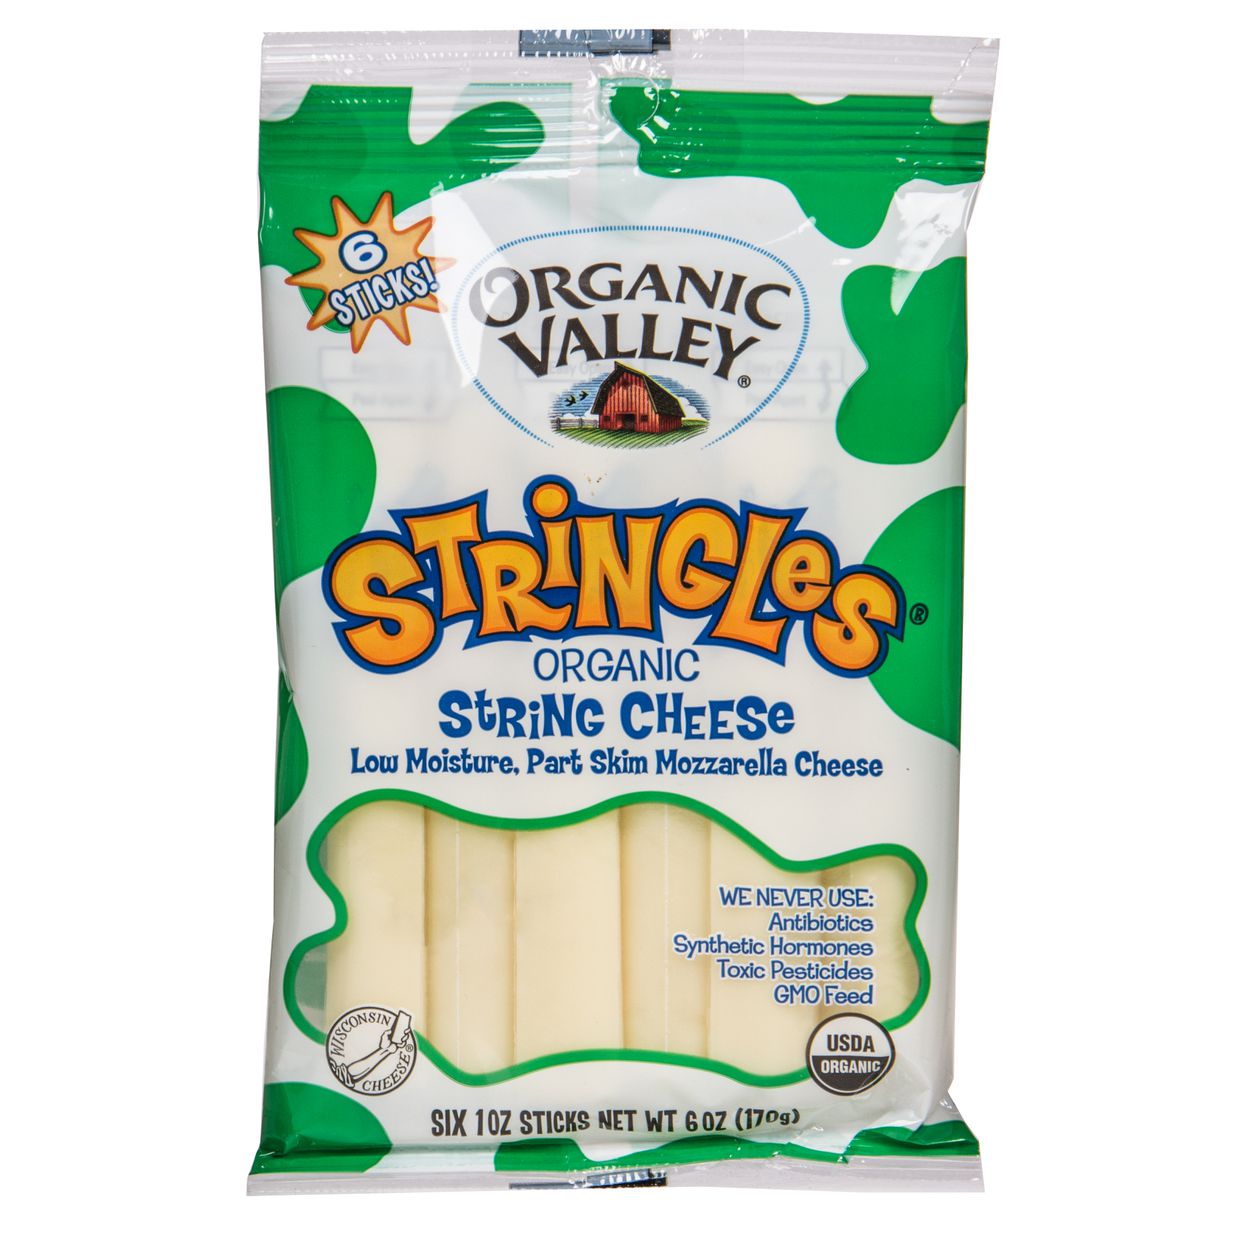 organic valley stringles cheese